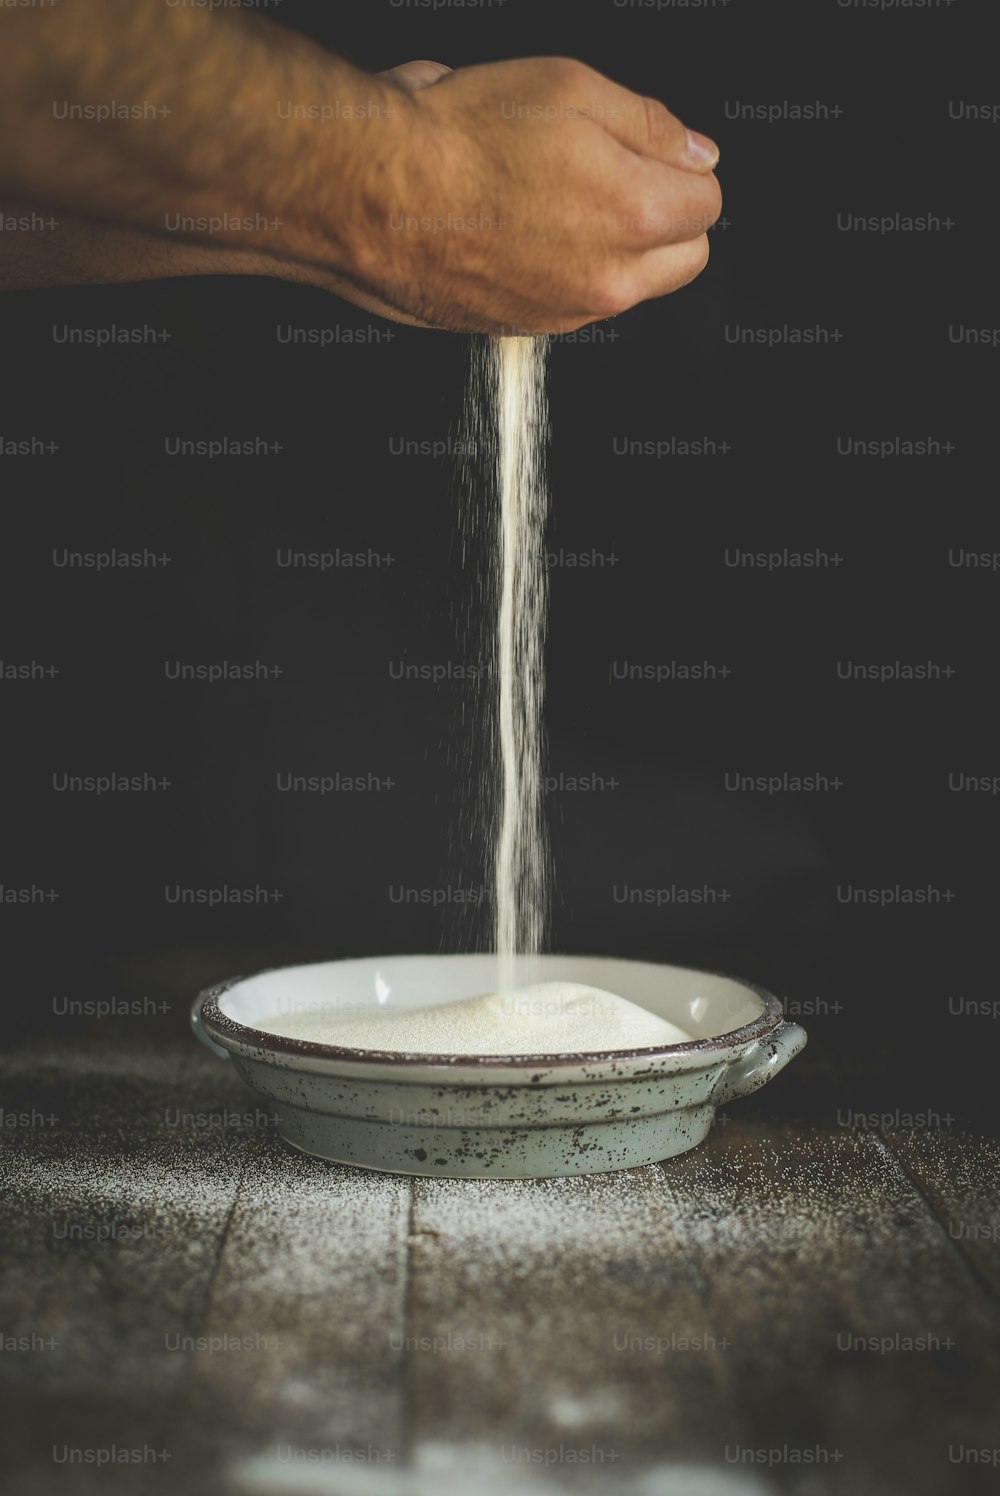 a hand pouring a liquid into a bowl